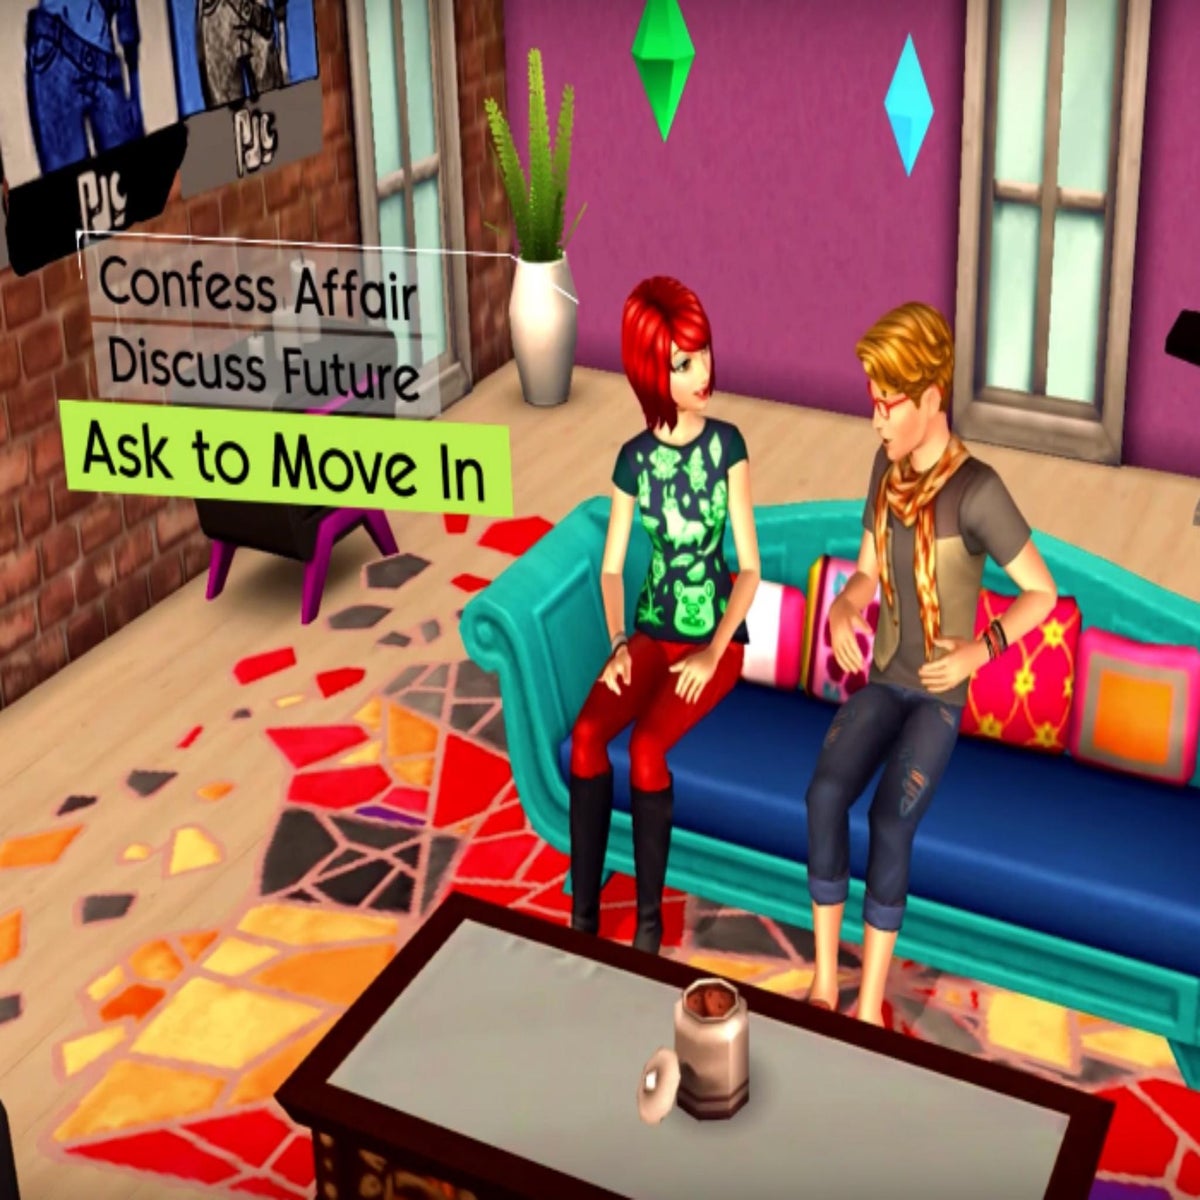 EA Announces 'The Sims Mobile' Coming Soon to iOS - MacRumors